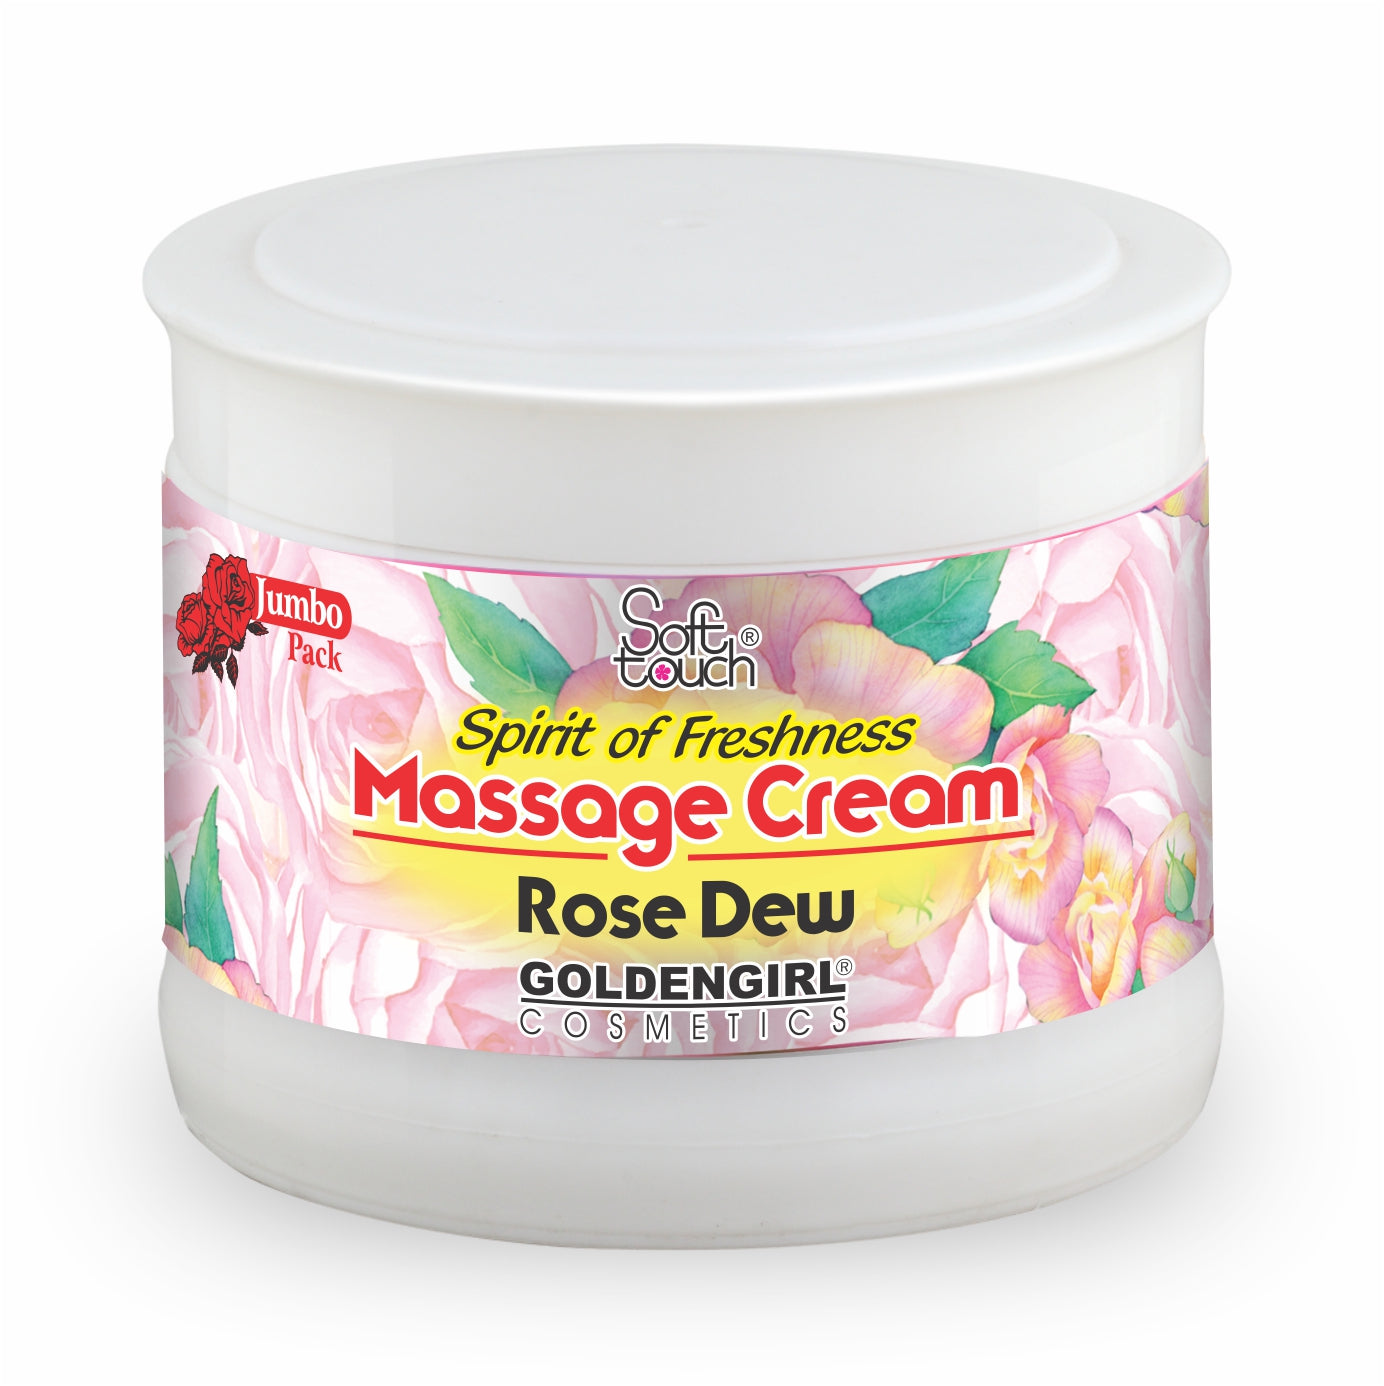 Massage Cream (Rose Dew) 500gm - Golden Girl Cosmetics